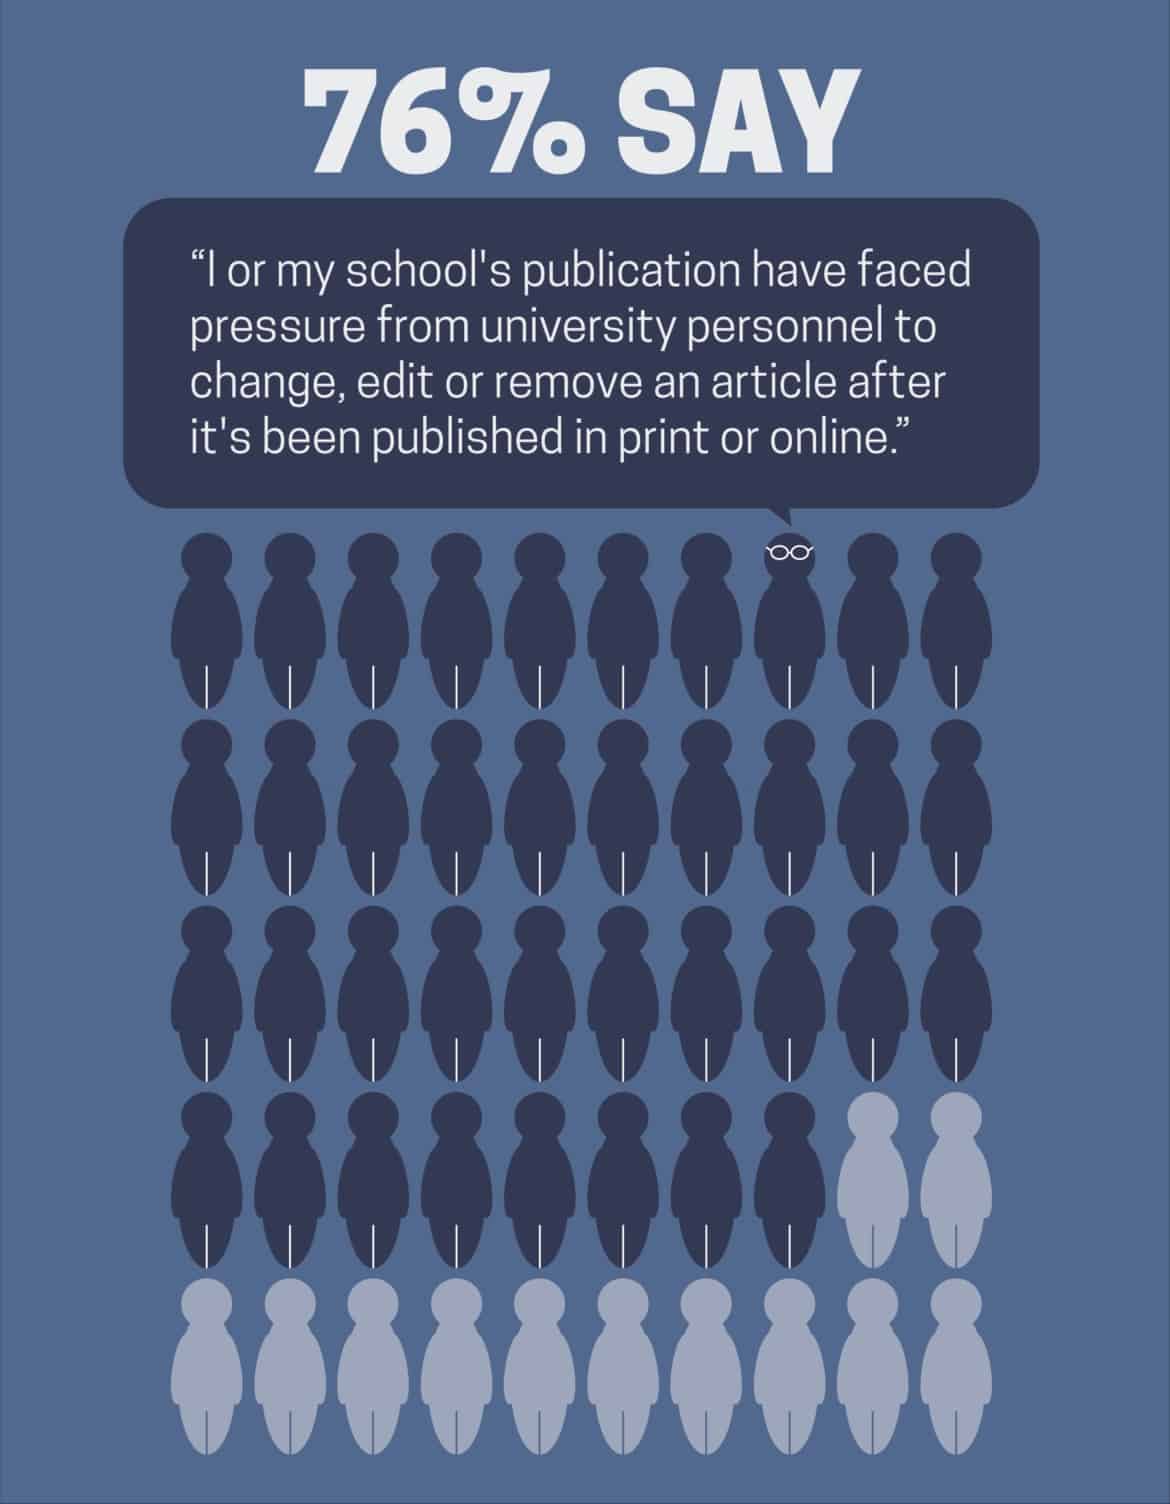 Graphic courtesy of ISPU Student Press Coalition designer Ellen Hershberger